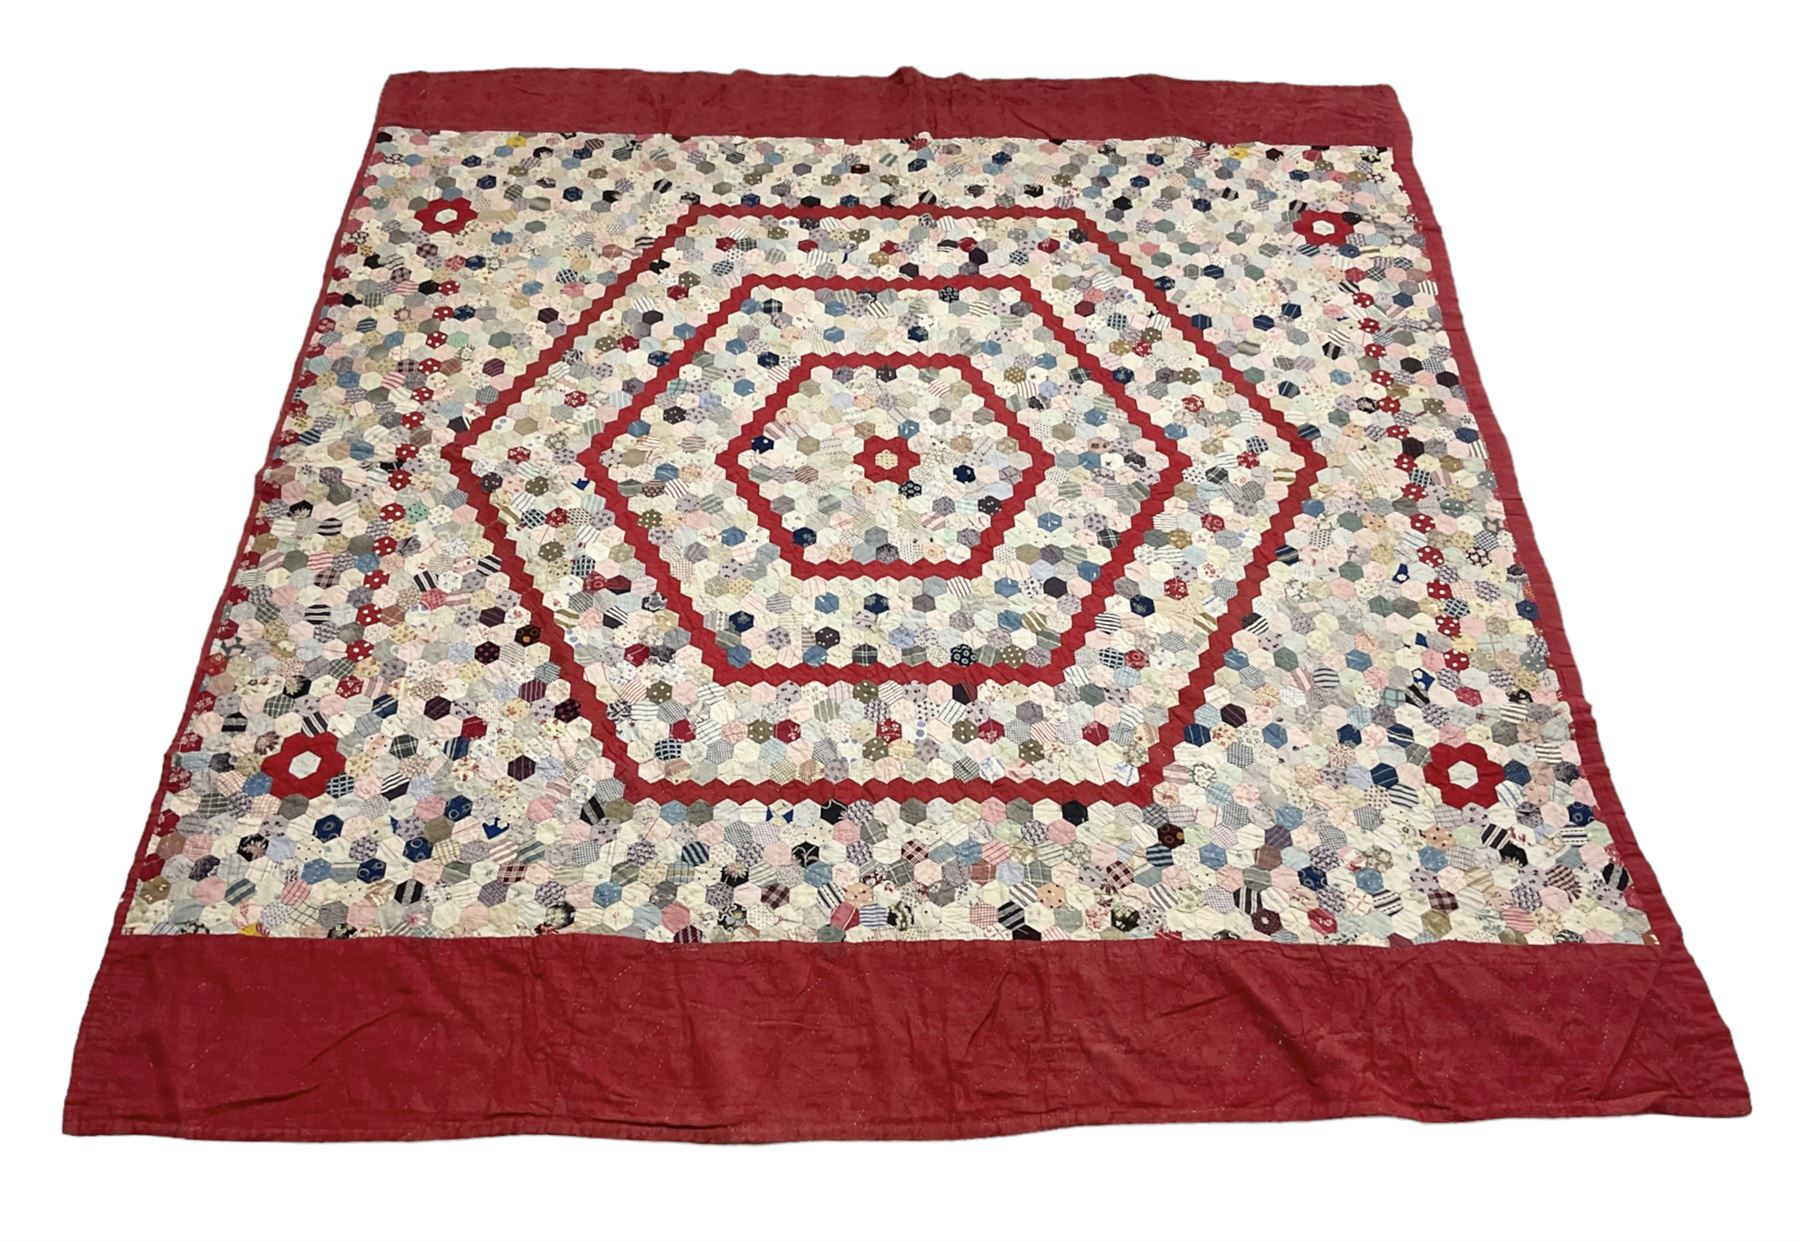 19th century patchwork quilt